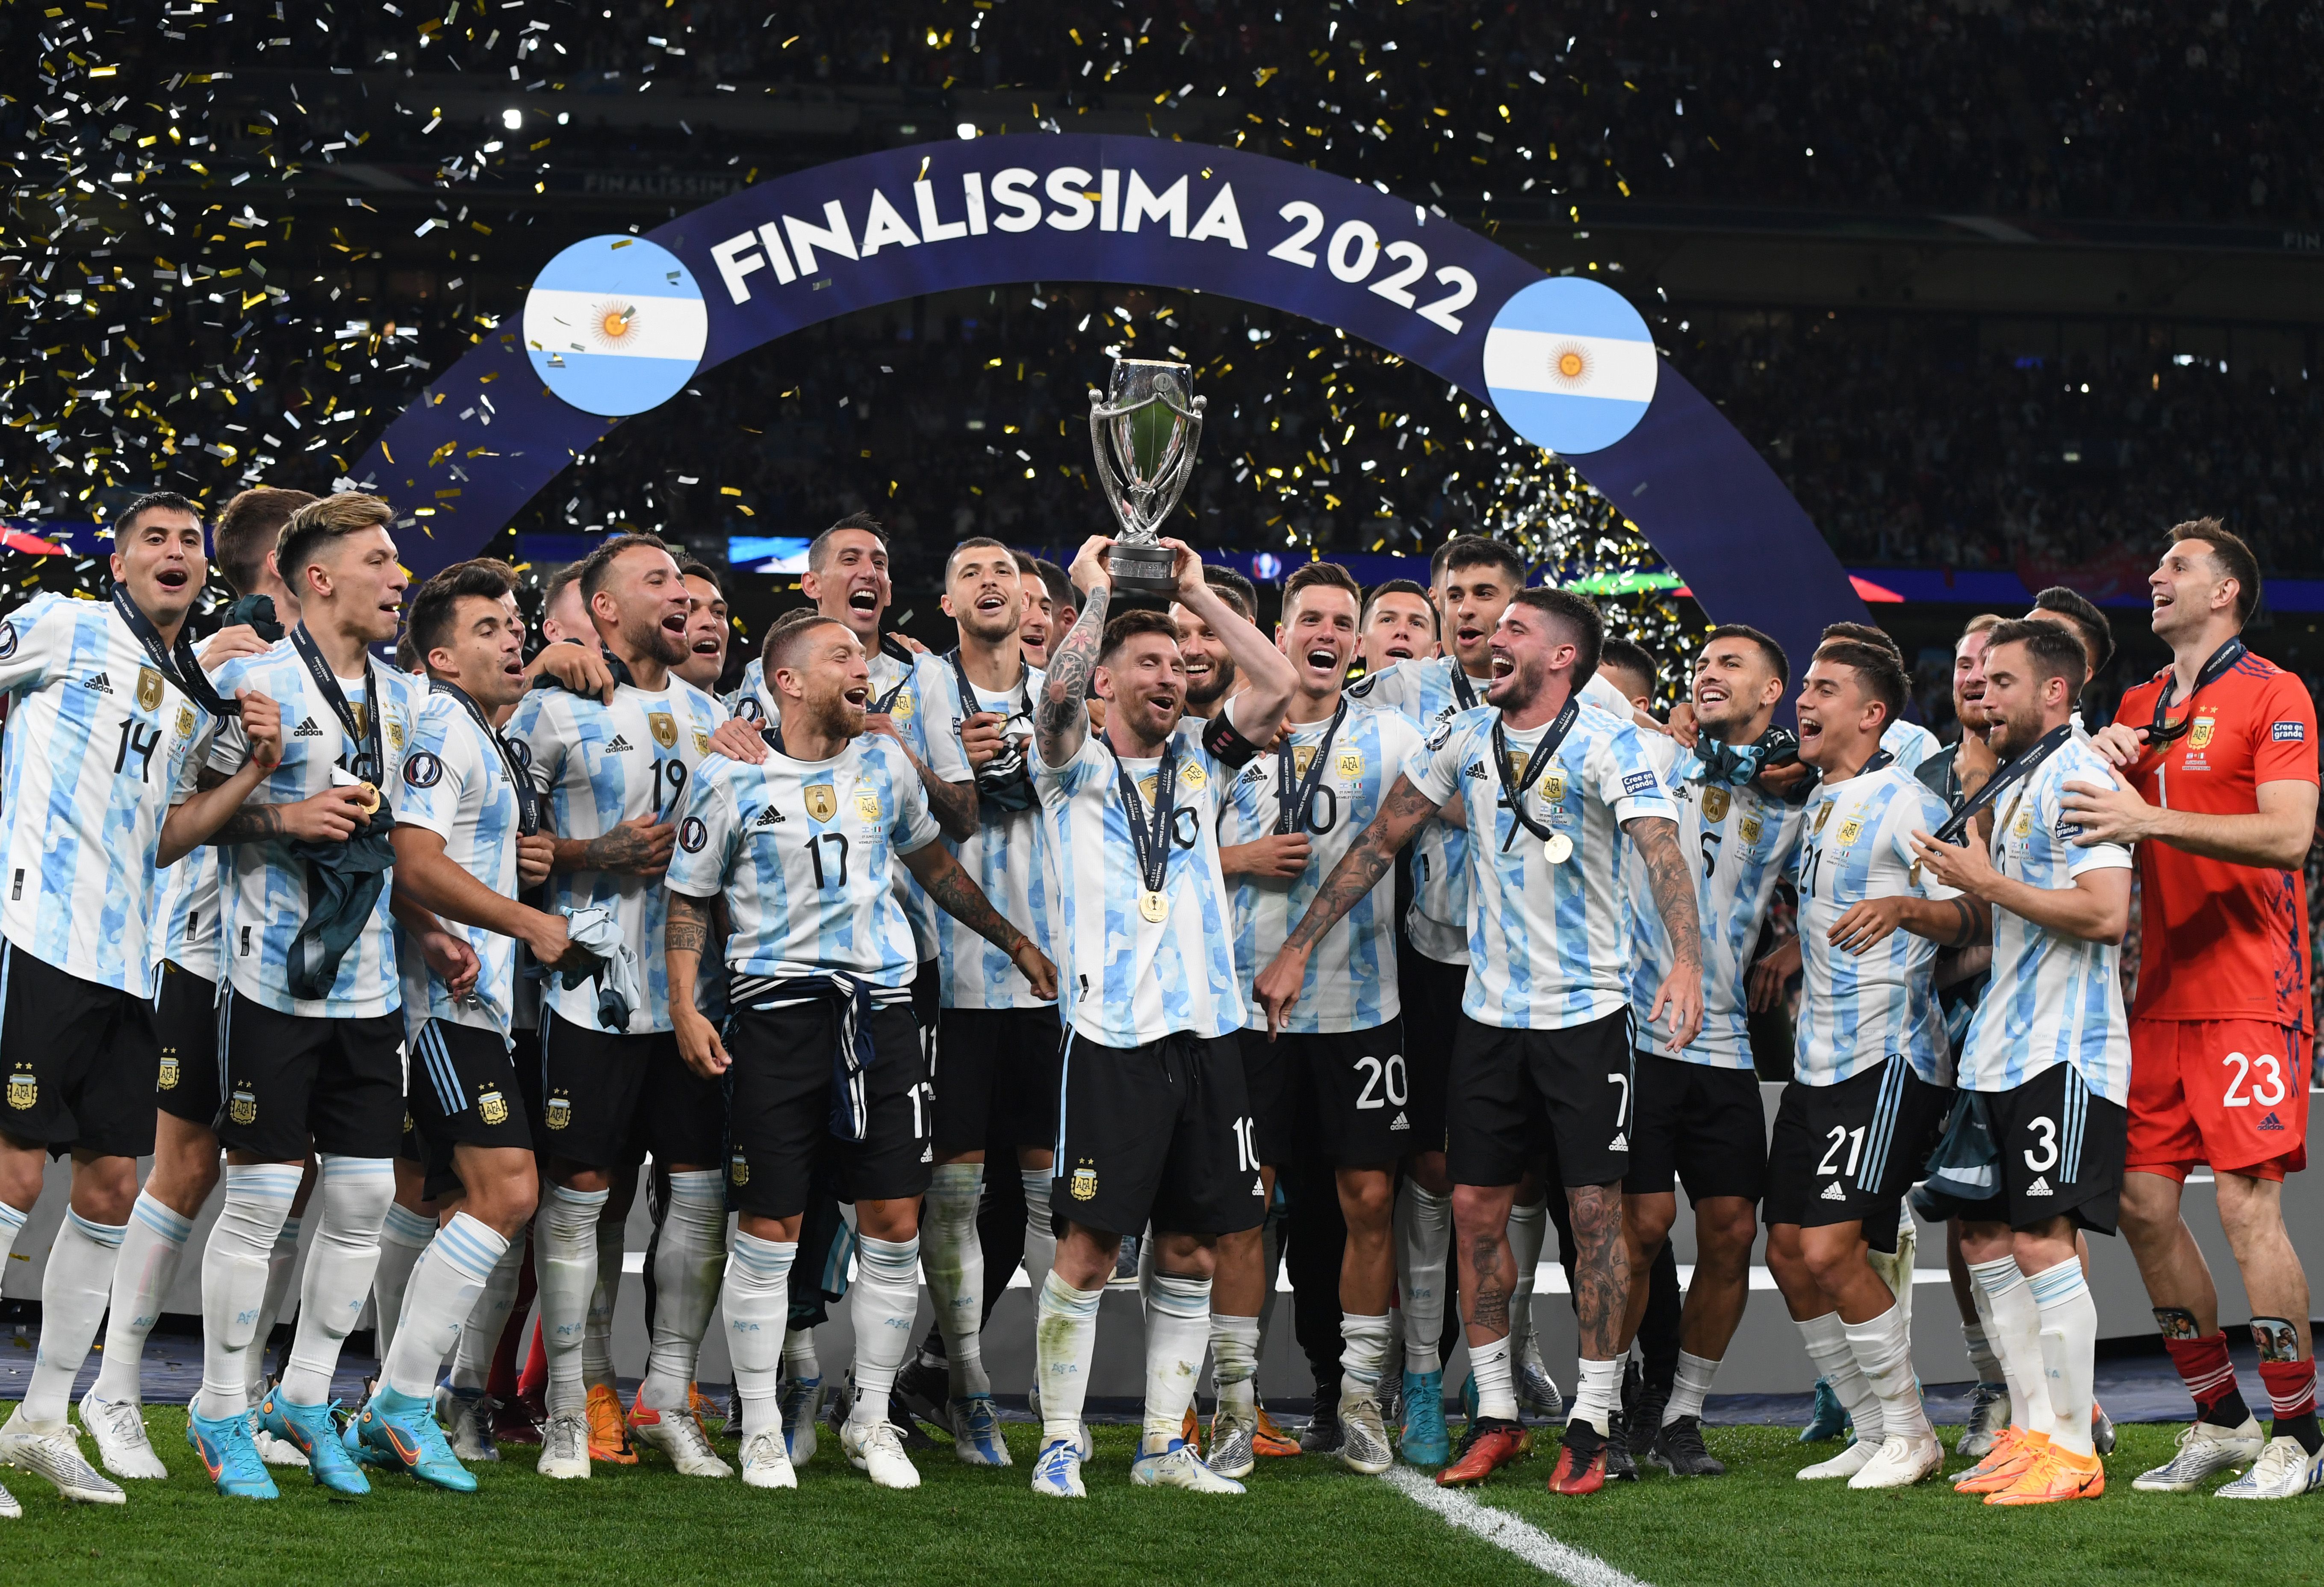 Argentina won the Finalissima